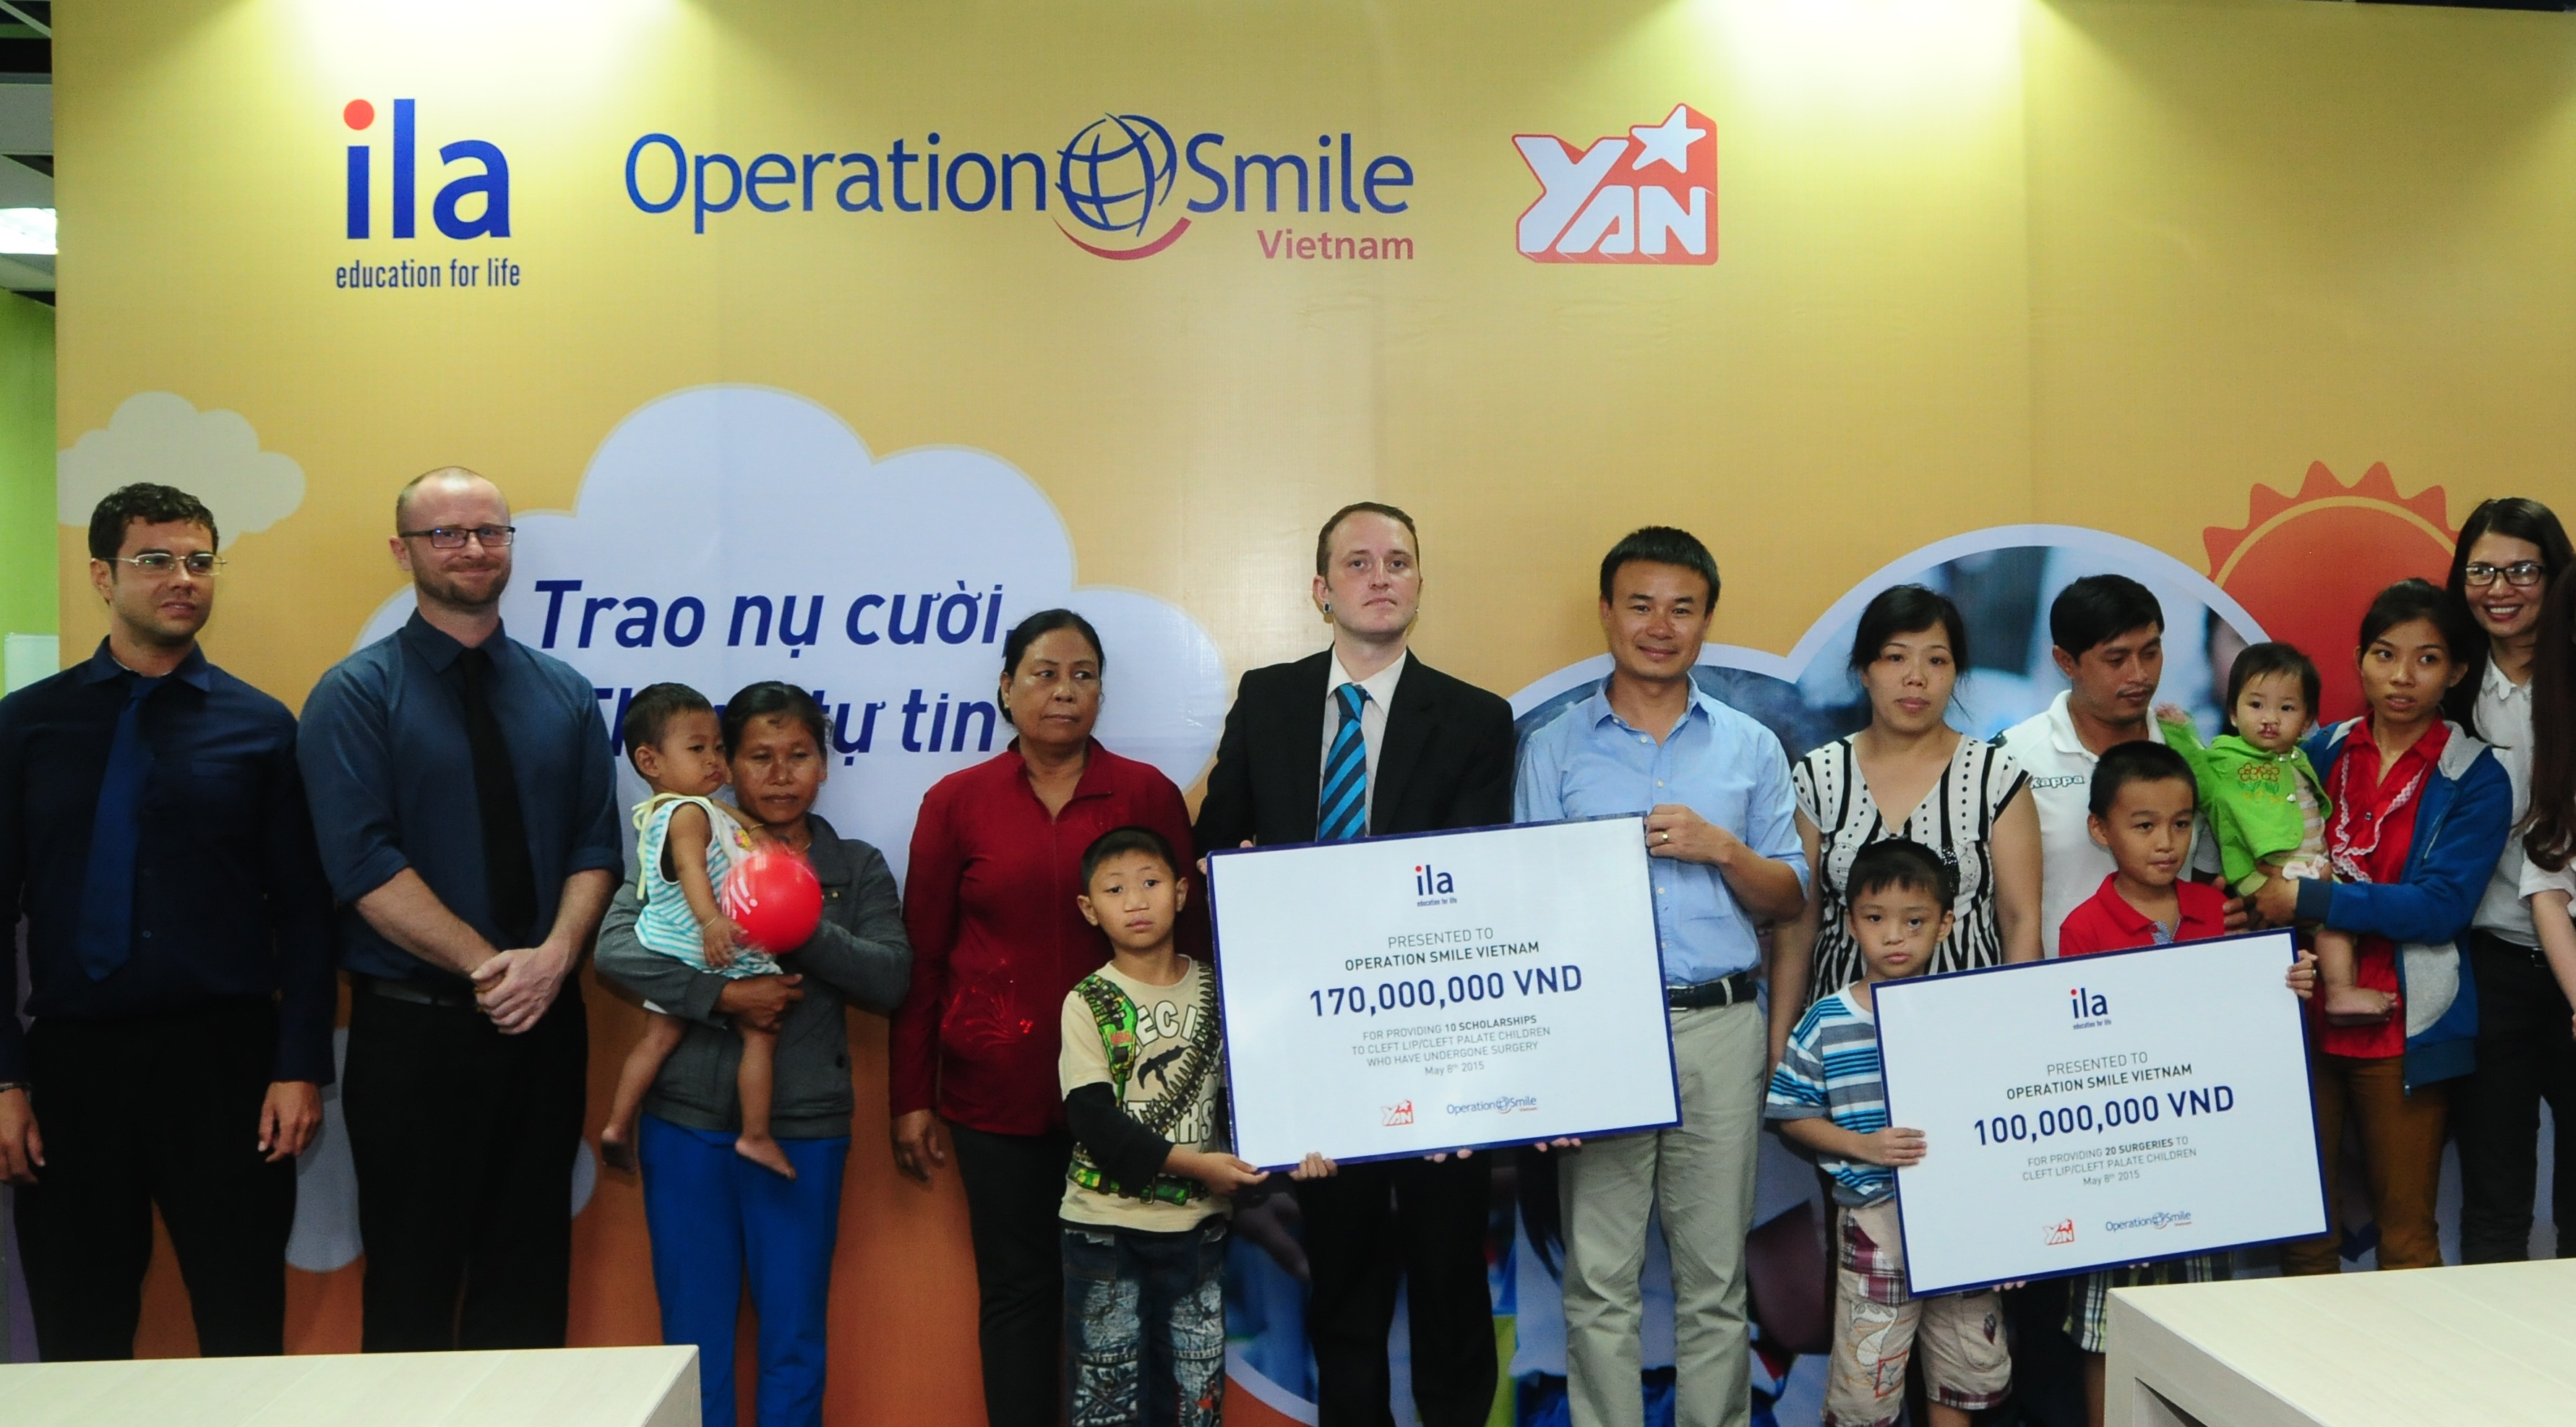 ILA trao tặng 270 triệu đồng cho tổ chức Operation Smile